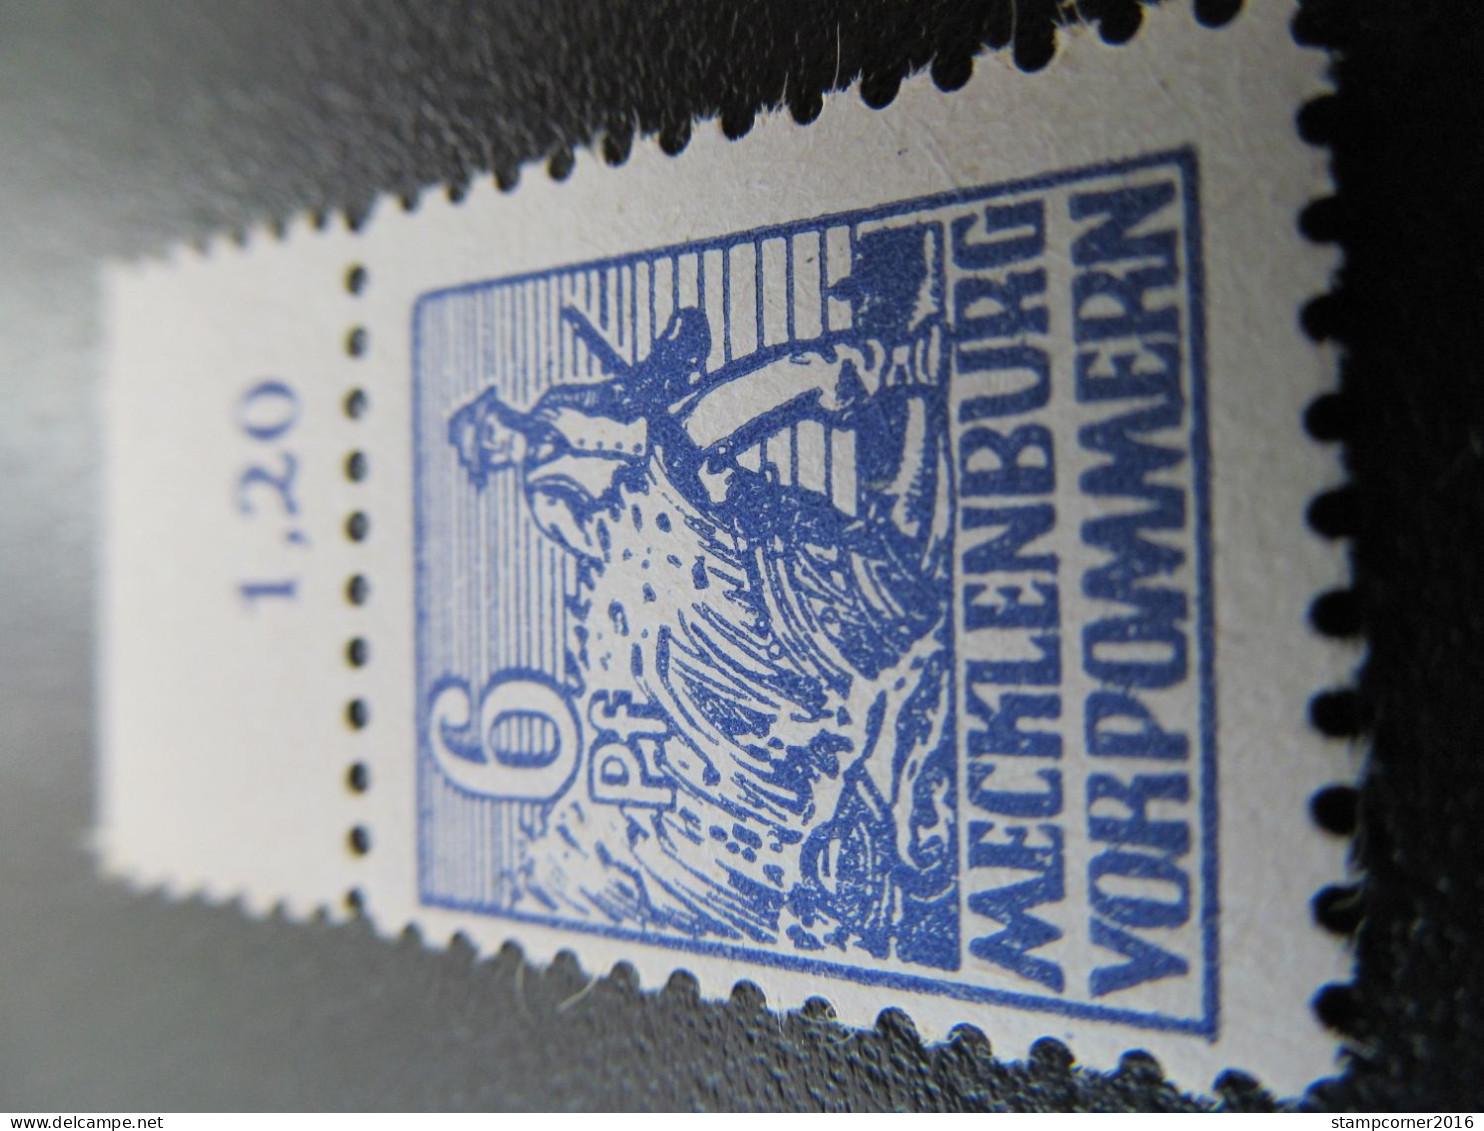 SBZ Nr. 33xb, 1946, Postfrisch, BPP Geprüft, Mi 17€ *DEK105* - Neufs